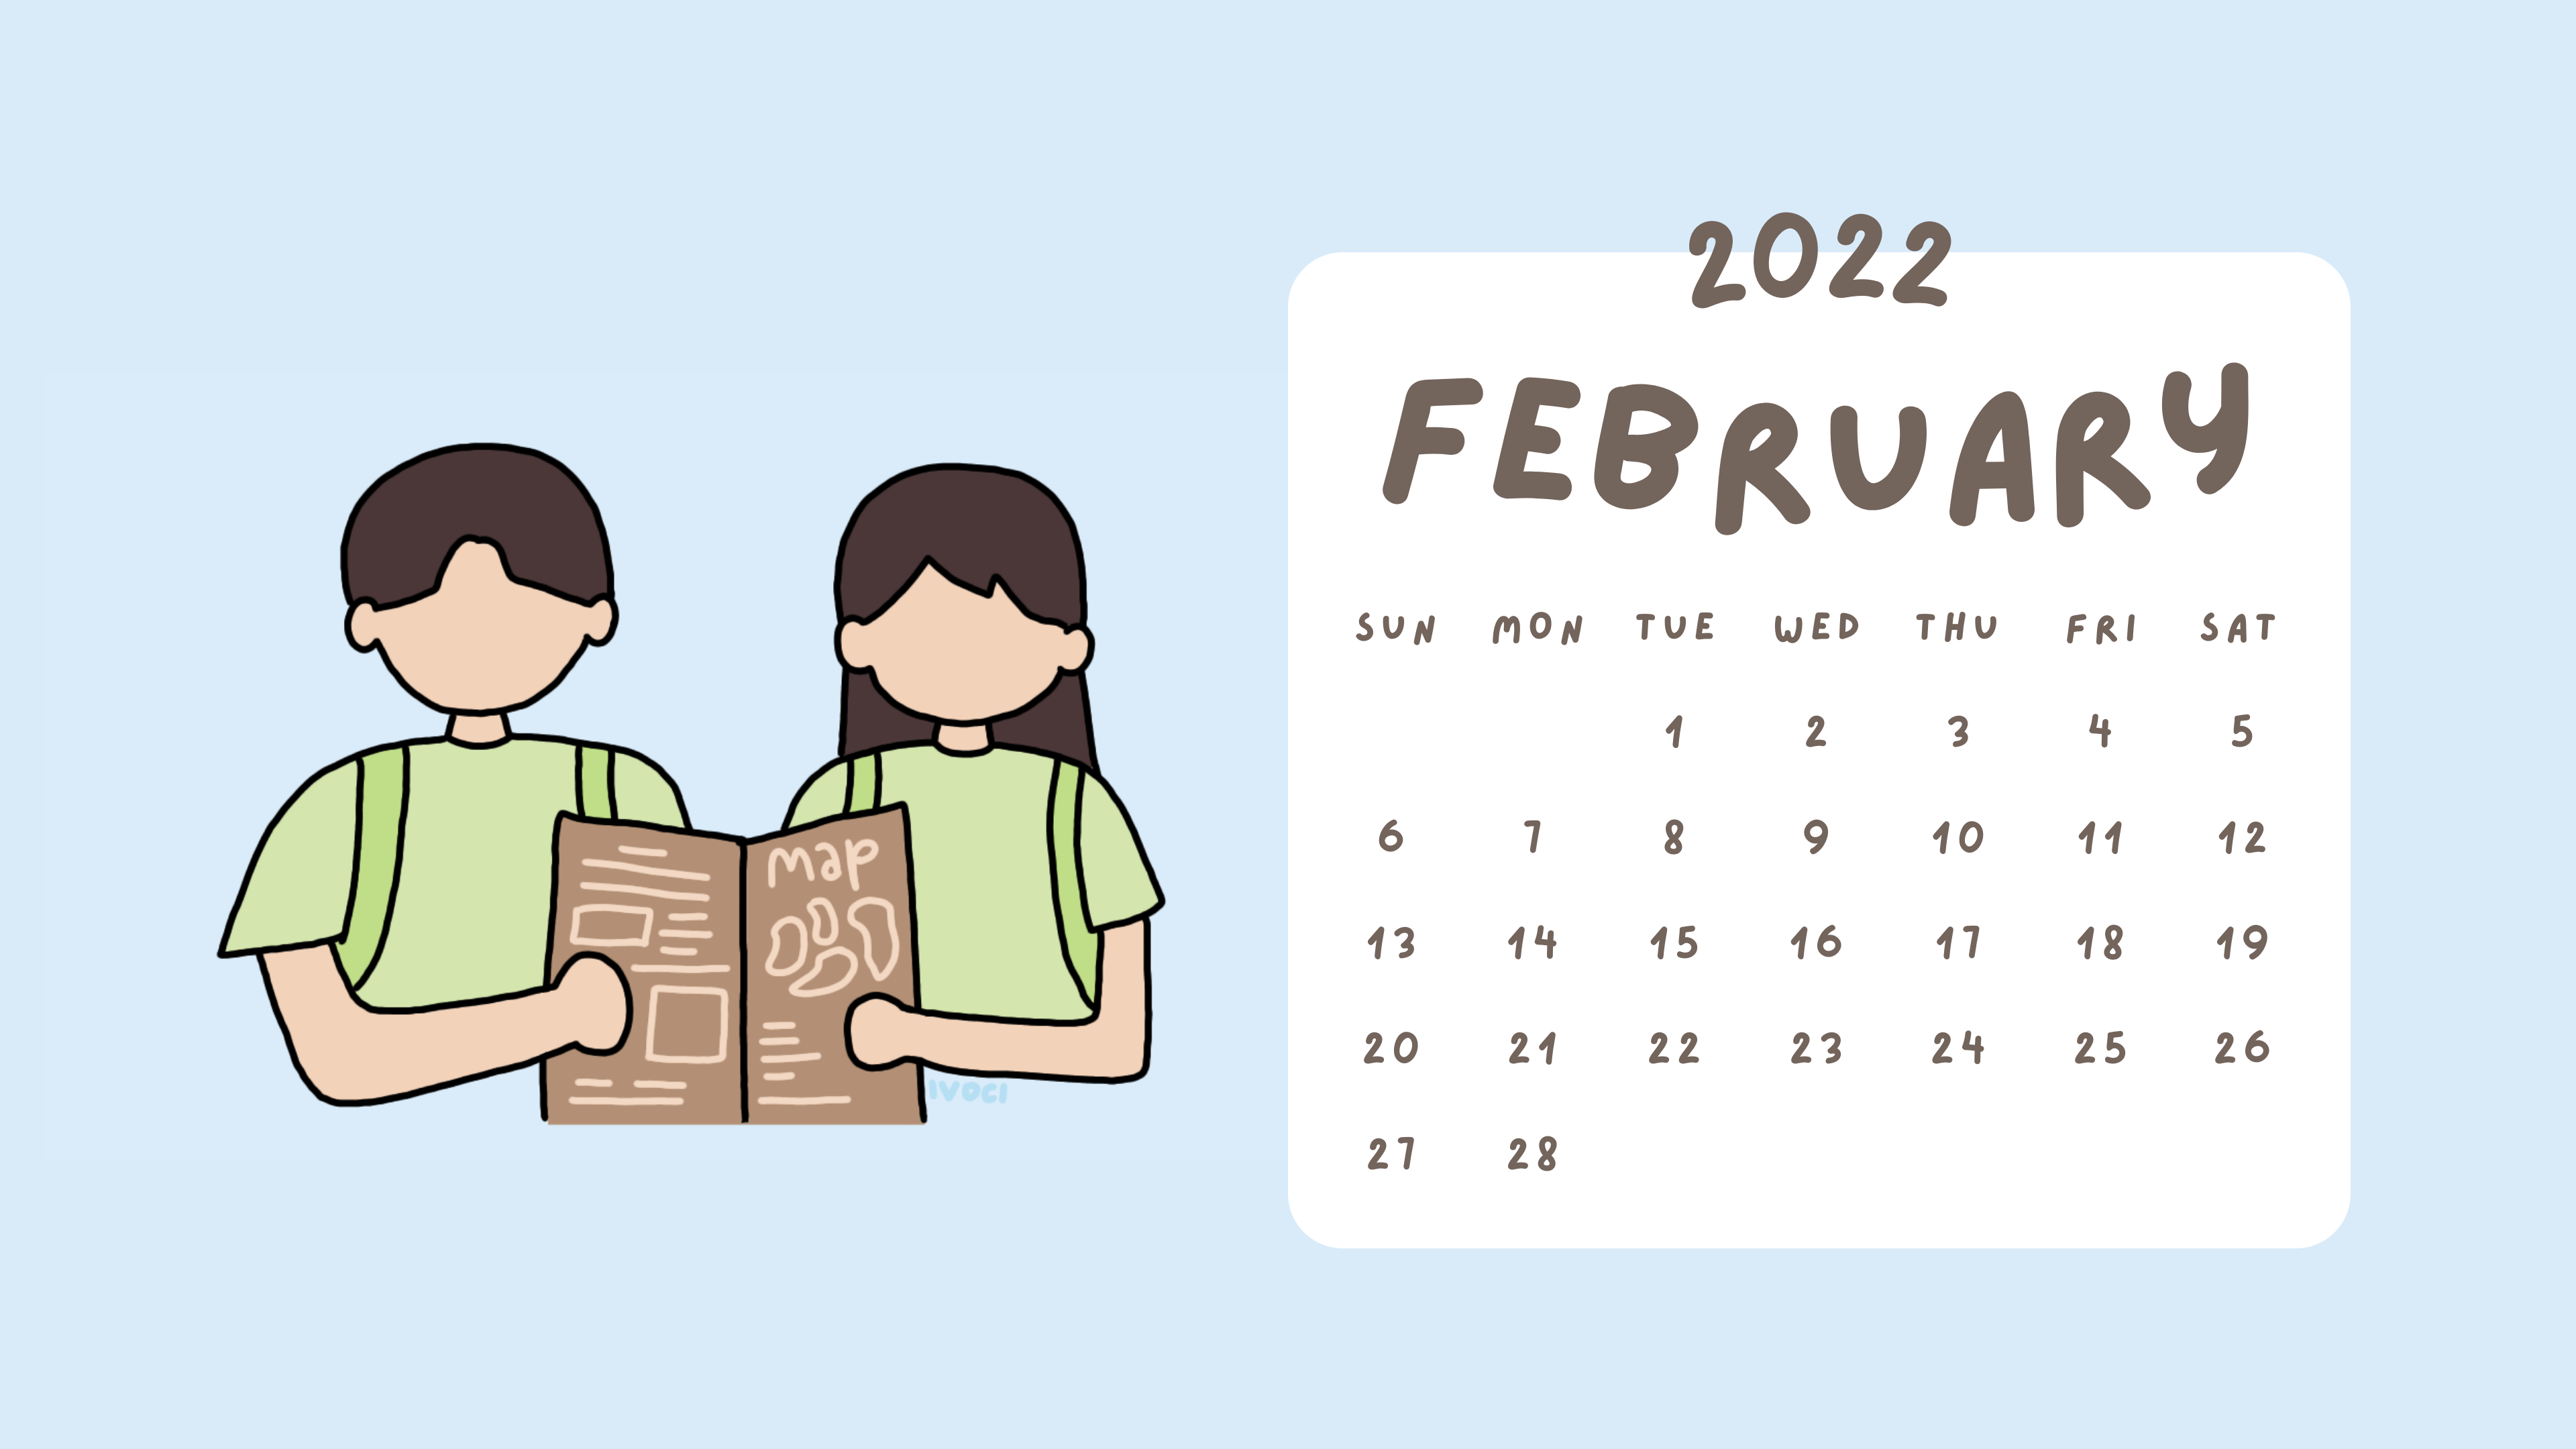 ivoci - Free Download: February 2022 Calendar Desktop Wallpapers - 4